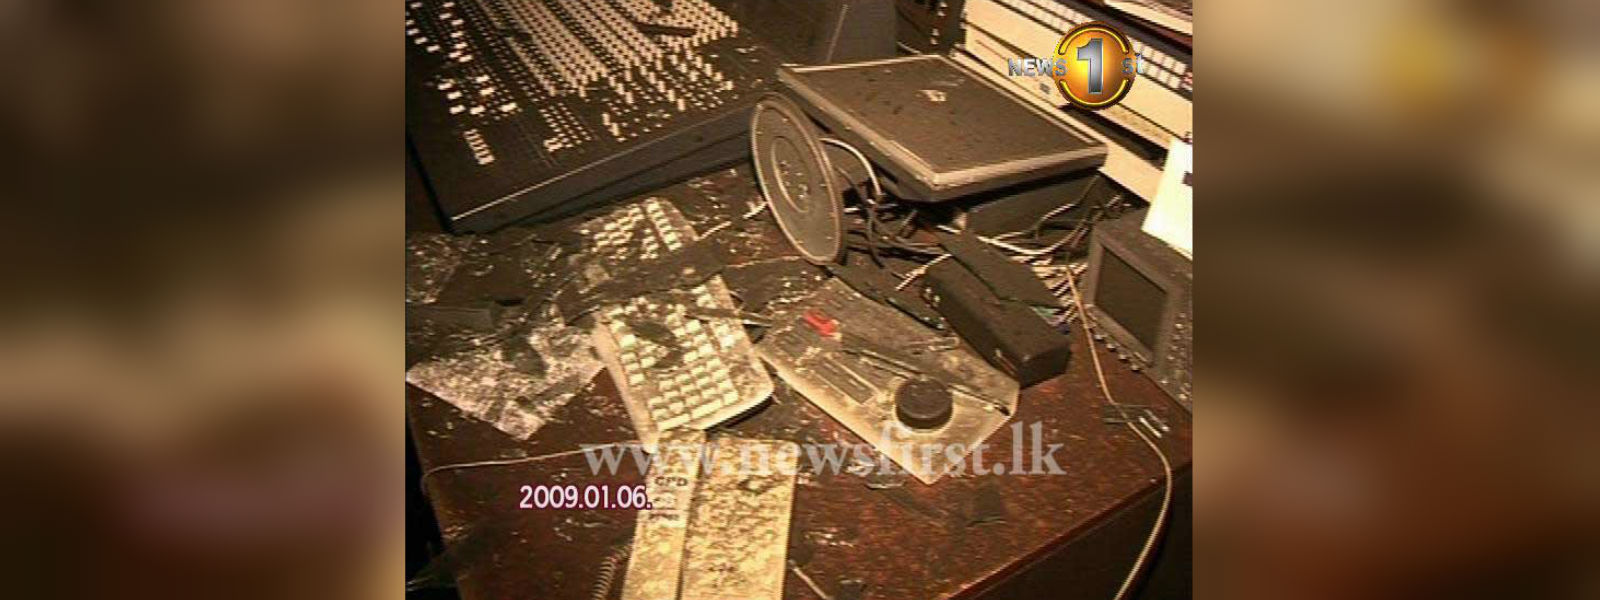 11 years since the attack on Sirasa Depanama Studio